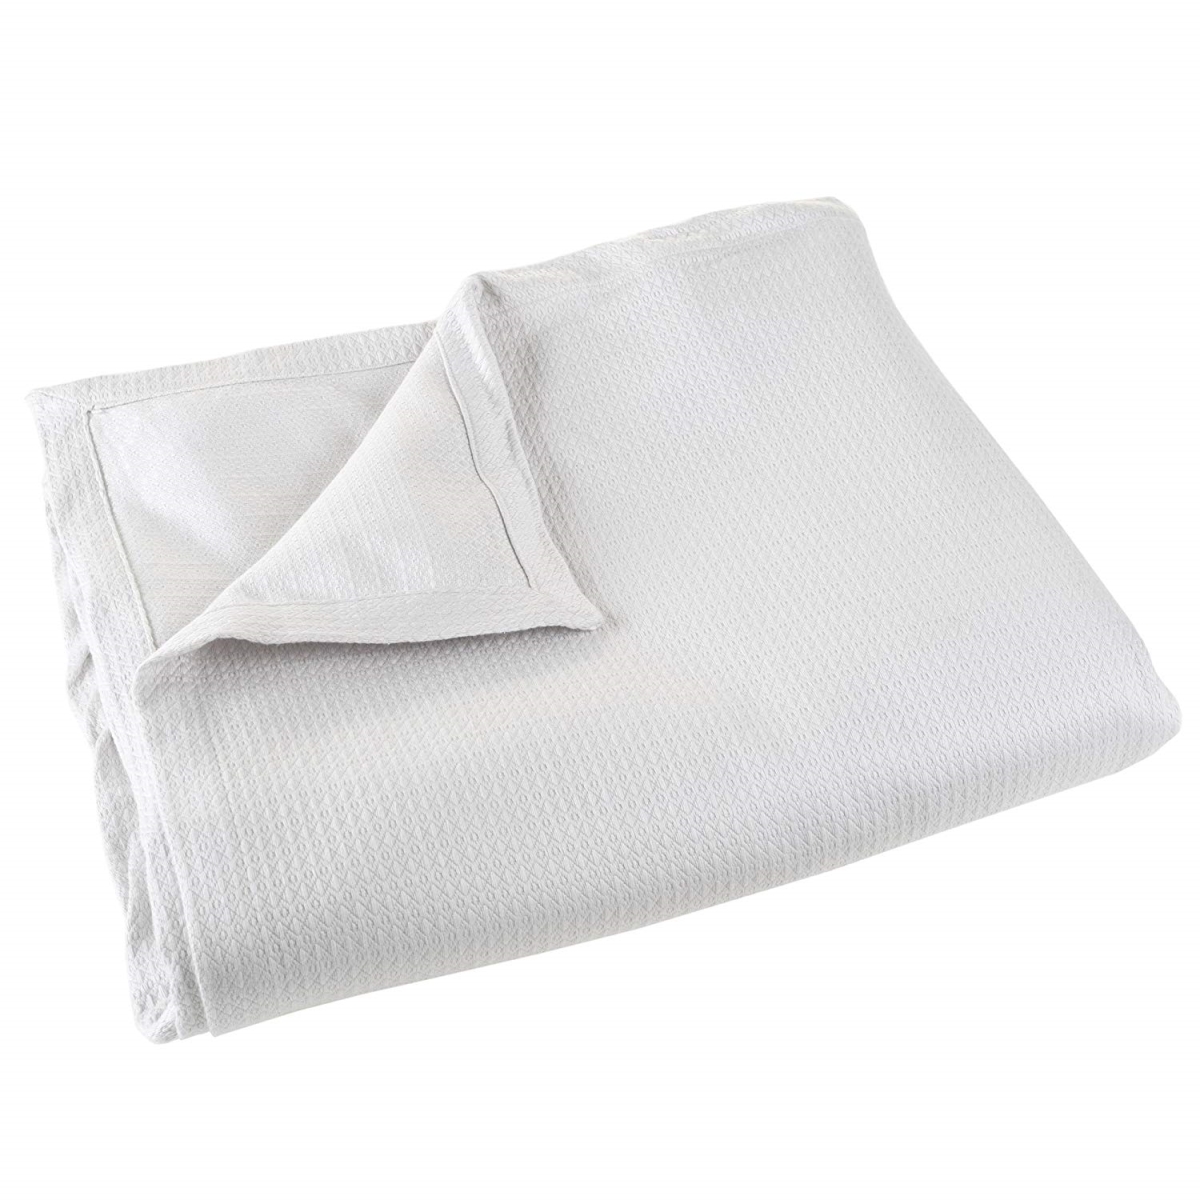 61a-43326 Soft Breathable 100 Percent Cotton Blanket, Platinum - King Size